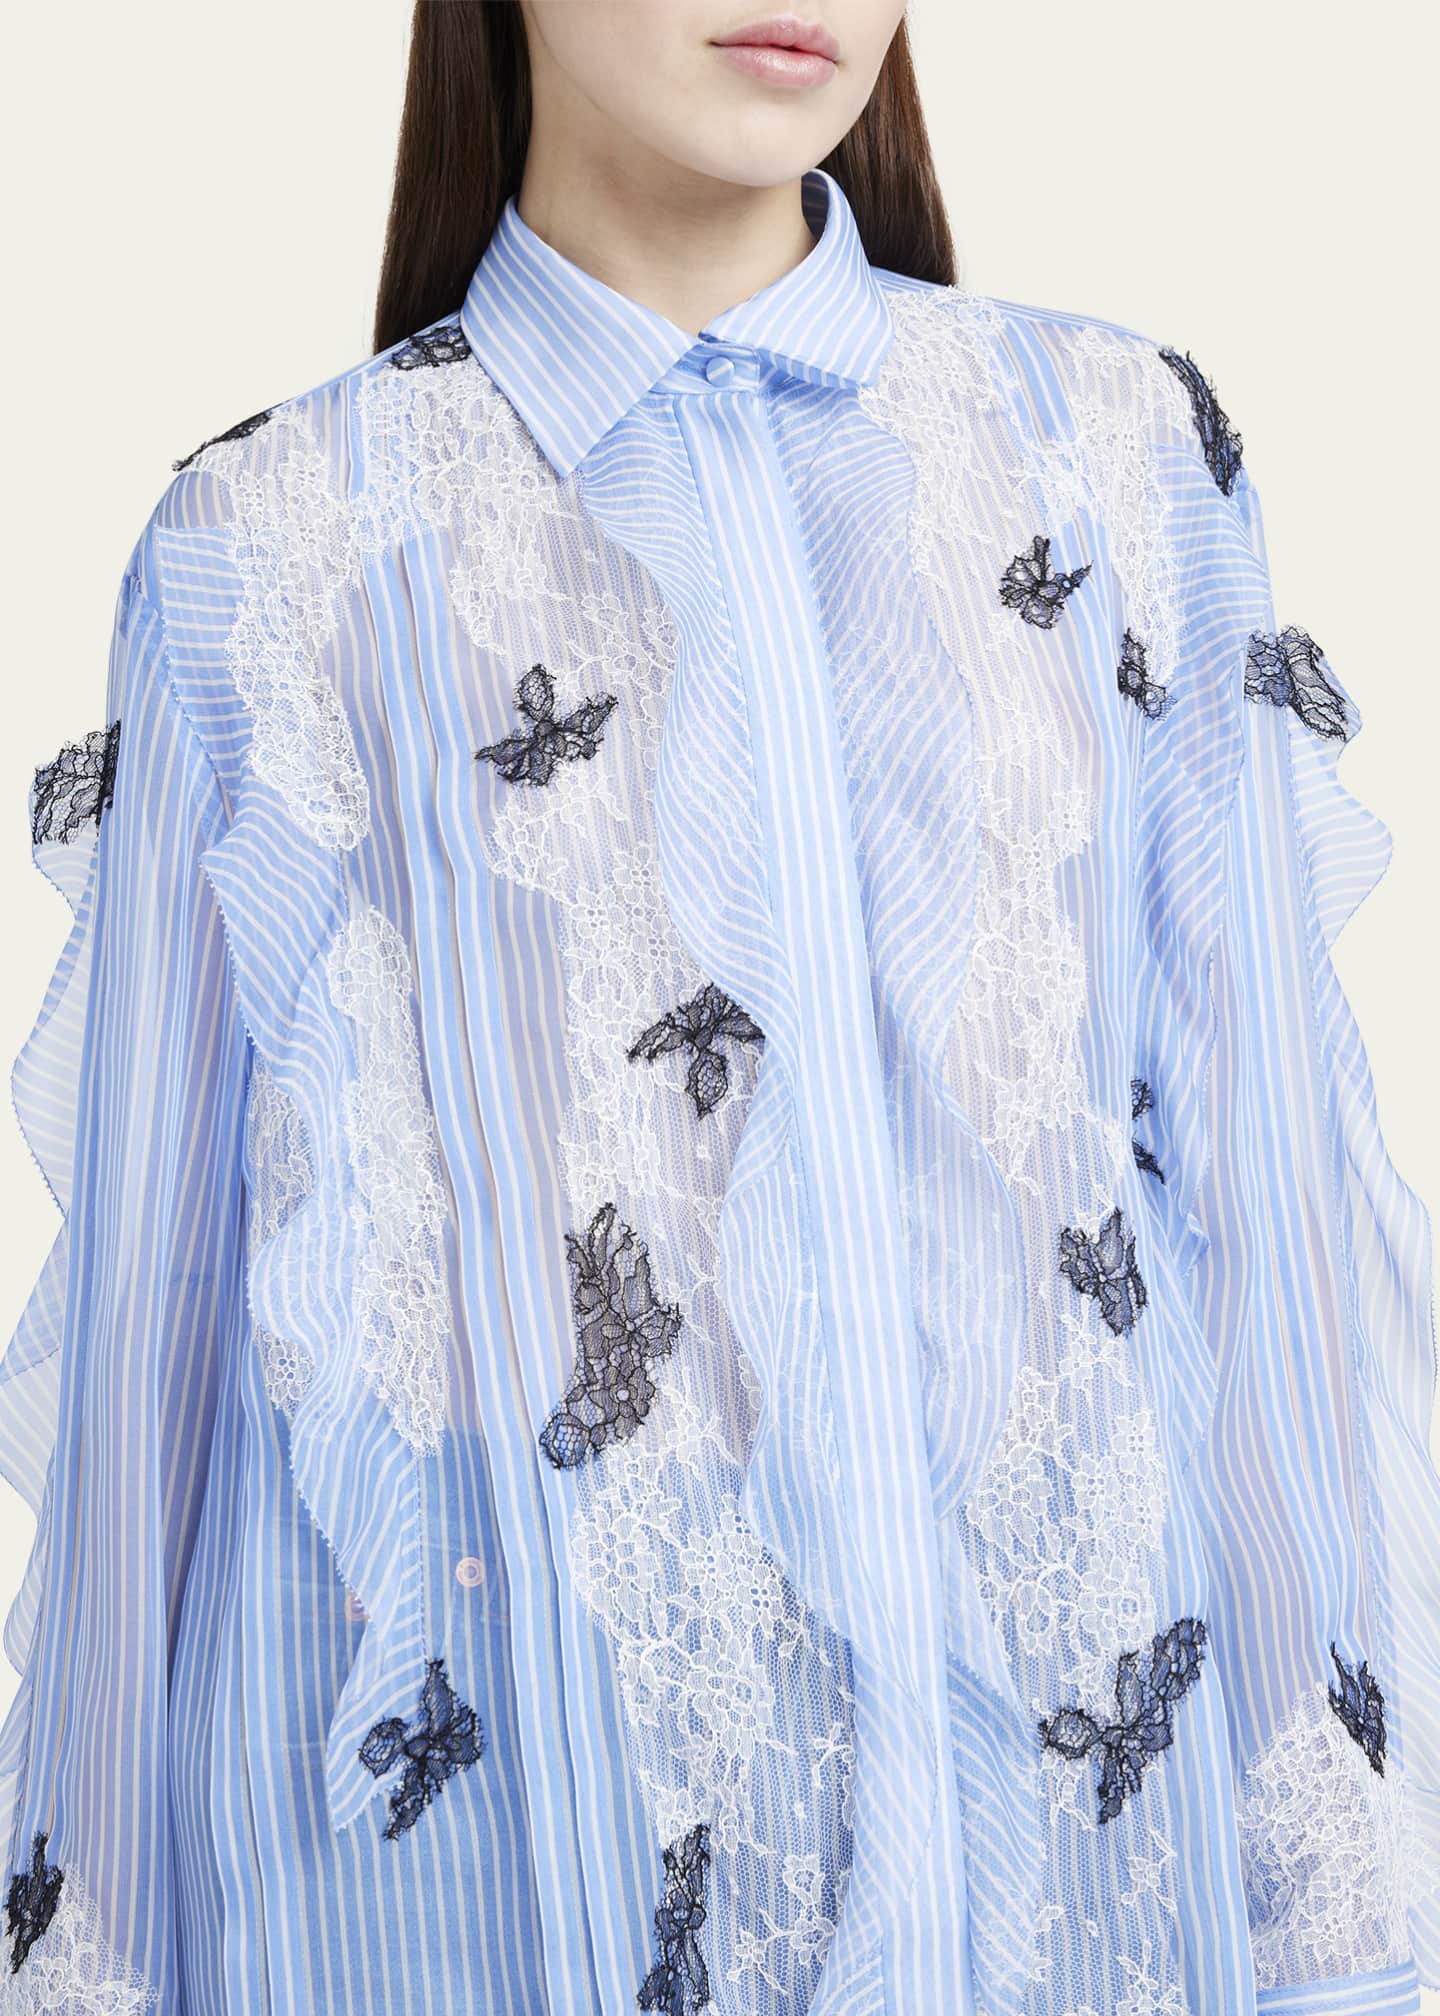 LOUIS VUITTON striped monogram pajamas shirt blue white L Genuine